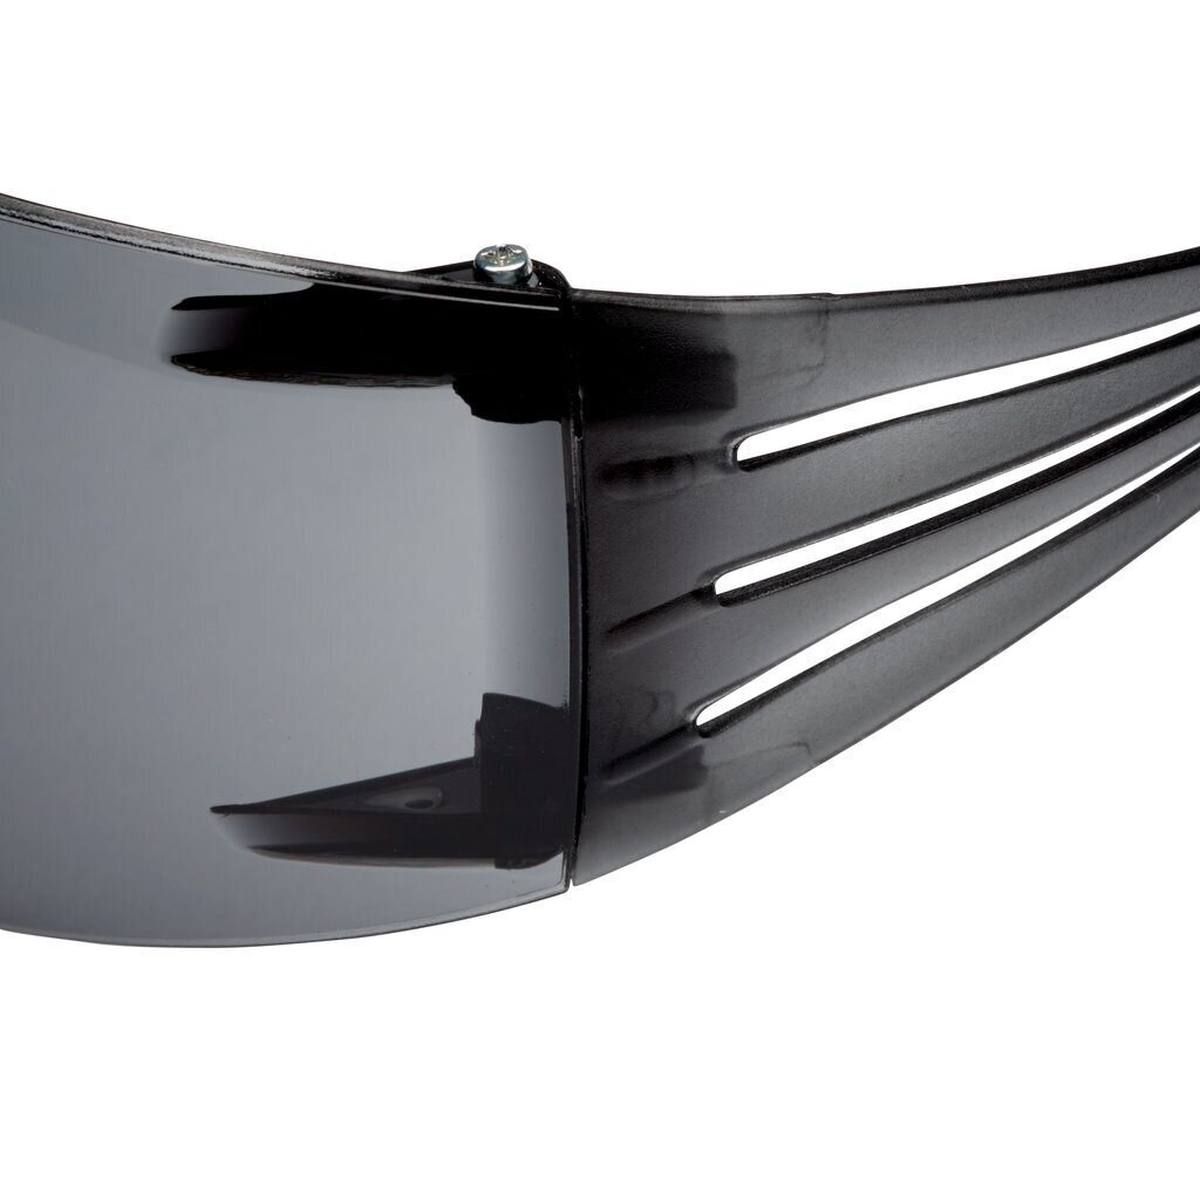 3M SecureFit 200 Schutzbrille, Antikratz-/Anti-Fog-Beschichtung, graue Scheibe, SF202AS/AF-EU